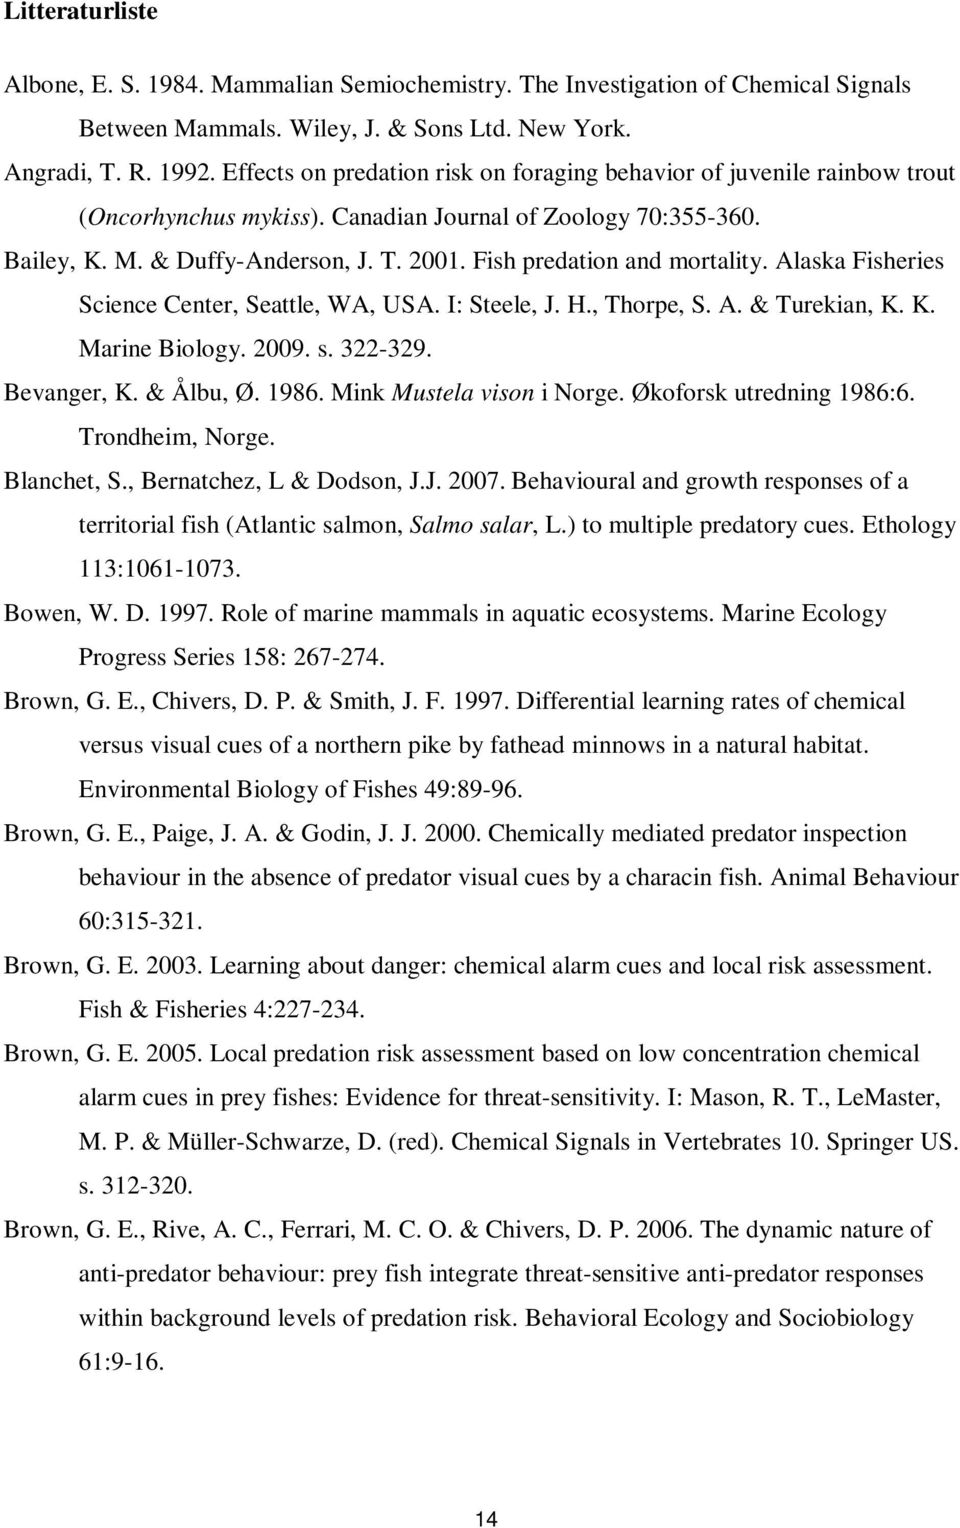 Fish predation and mortality. Alaska Fisheries Science Center, Seattle, WA, USA. I: Steele, J. H., Thorpe, S. A. & Turekian, K. K. Marine Biology. 2009. s. 322-329. Bevanger, K. & Ålbu, Ø. 1986.